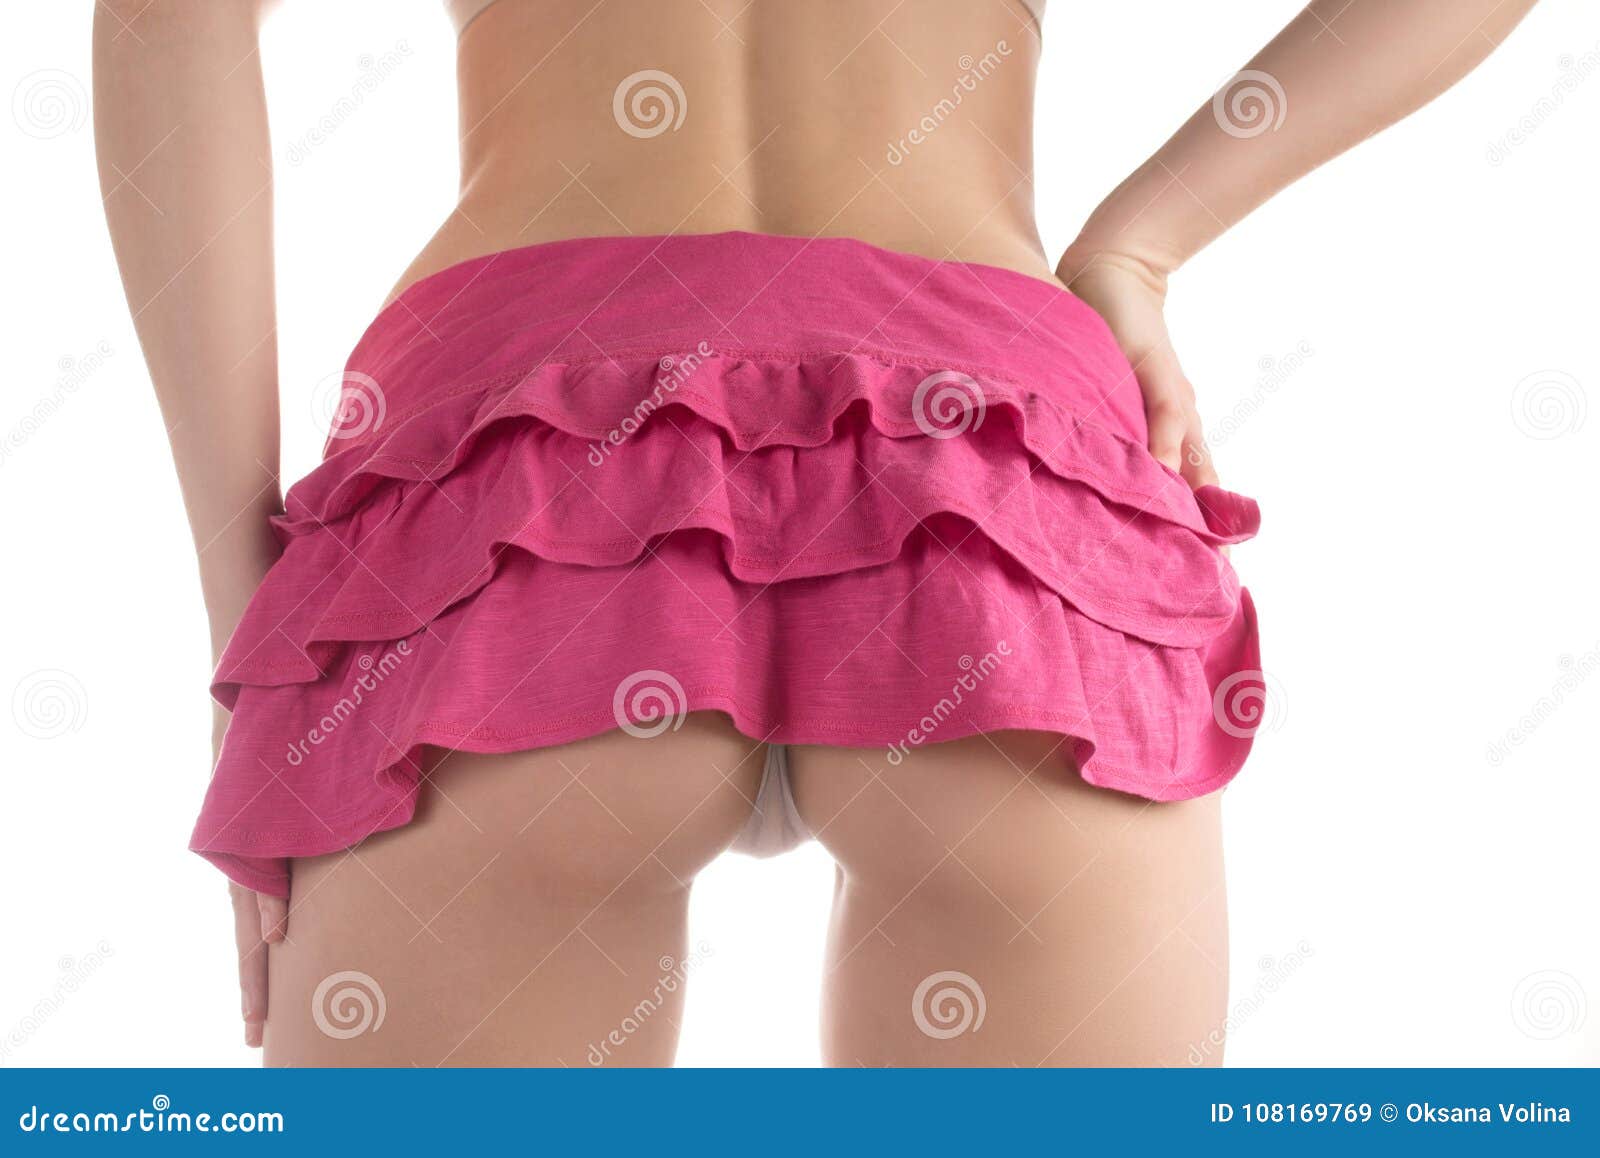 cherie logan recommends short skirt showing ass pic